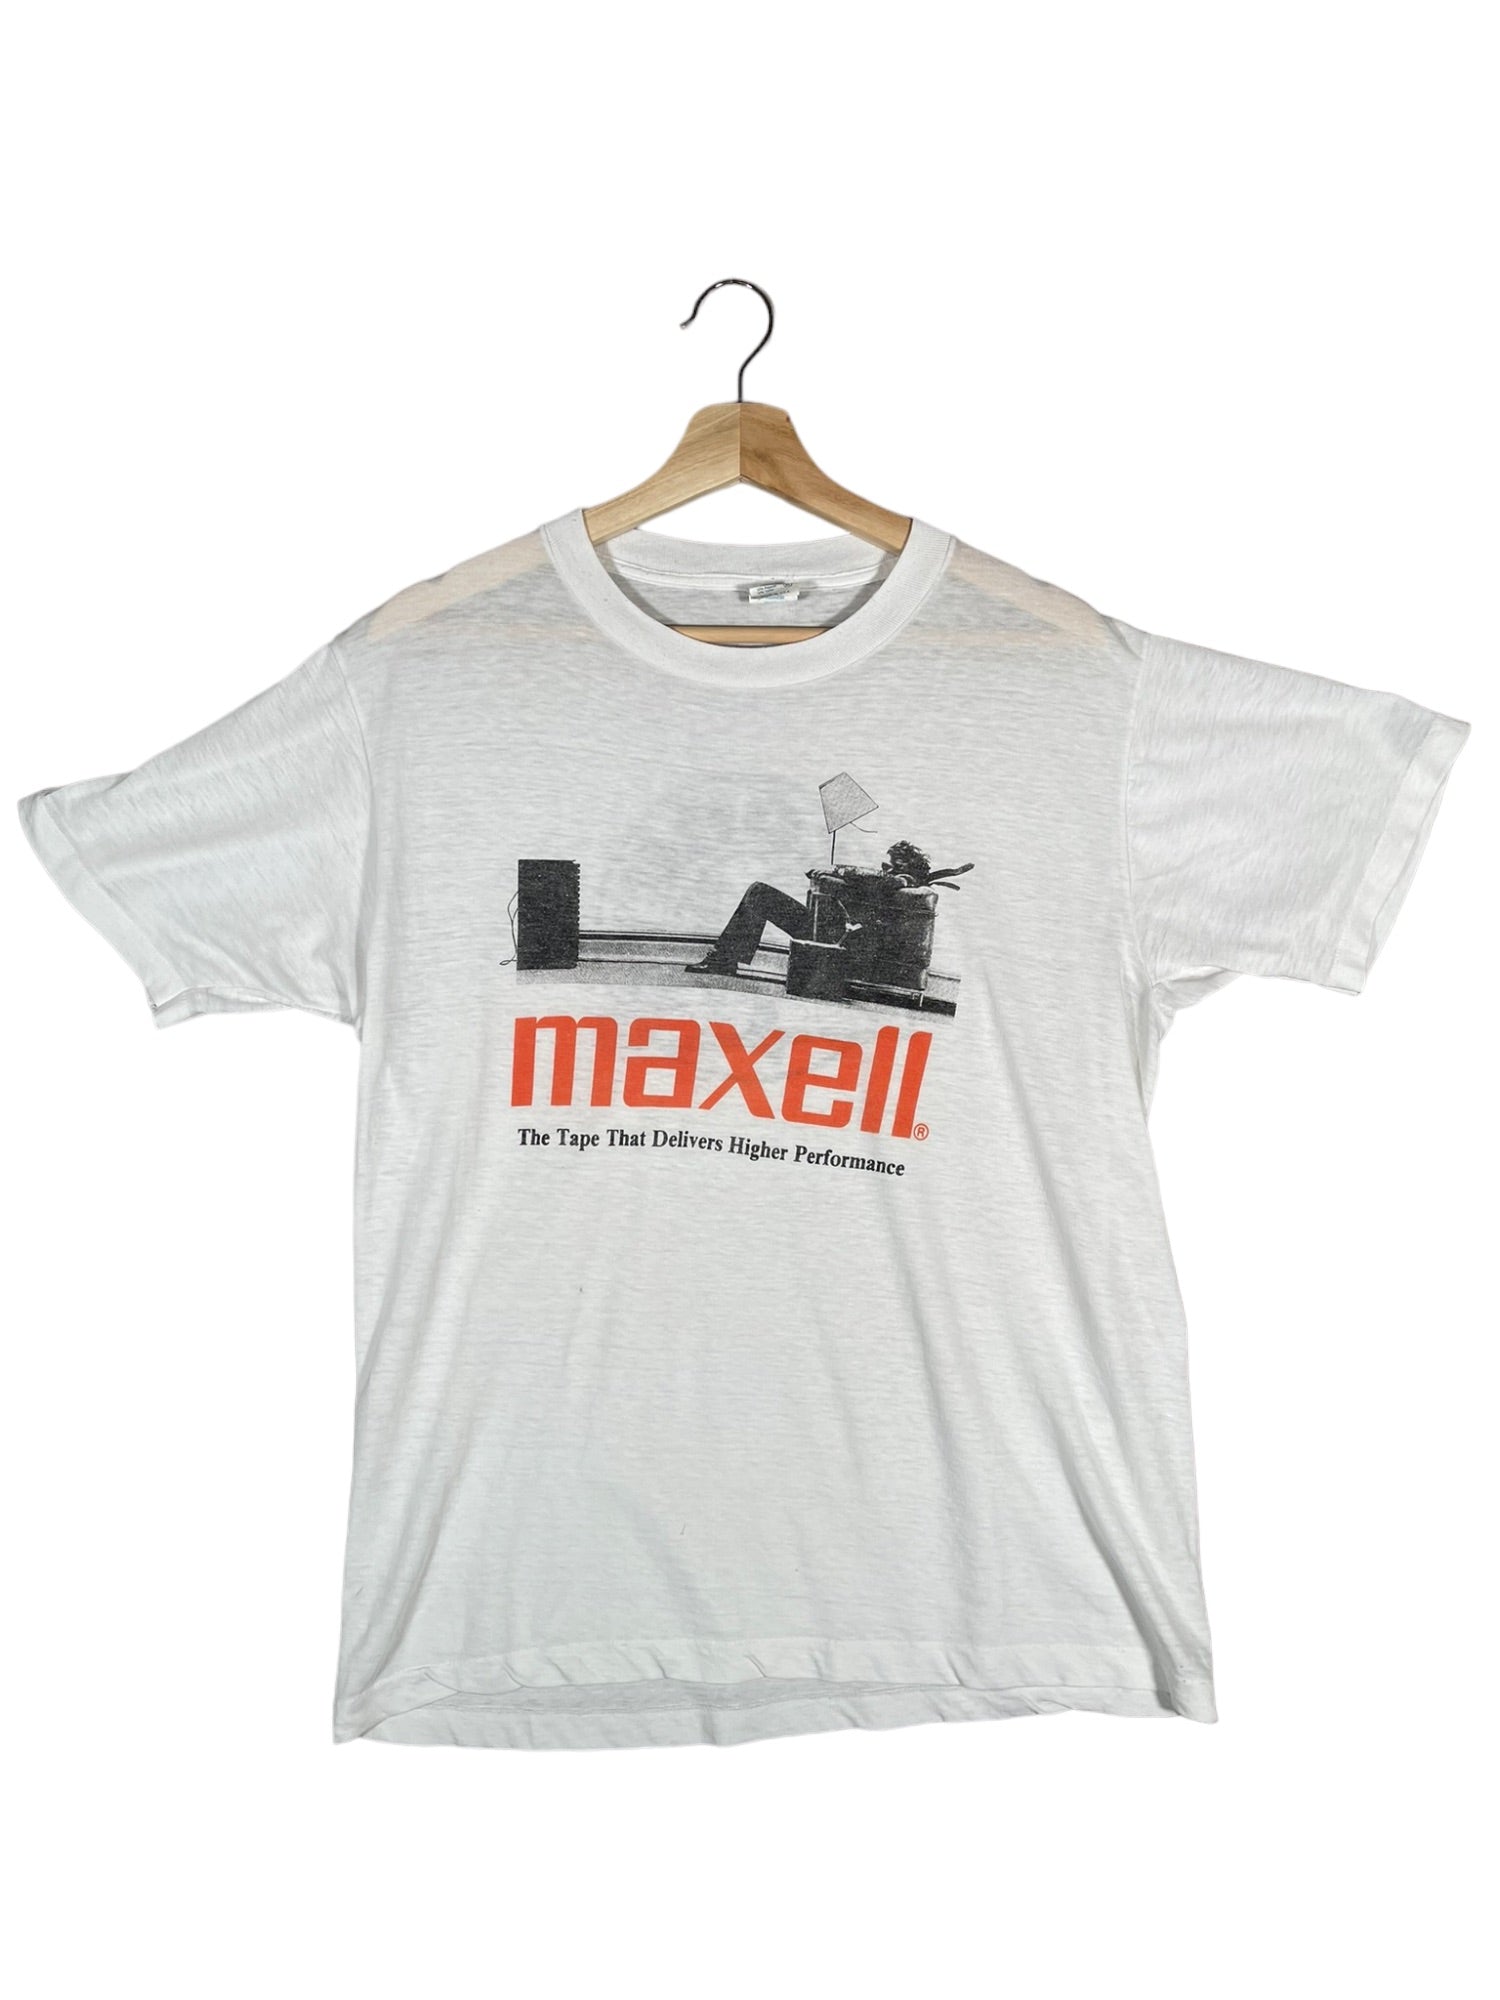 Vintage 1990's Maxell Promo T-Shirt